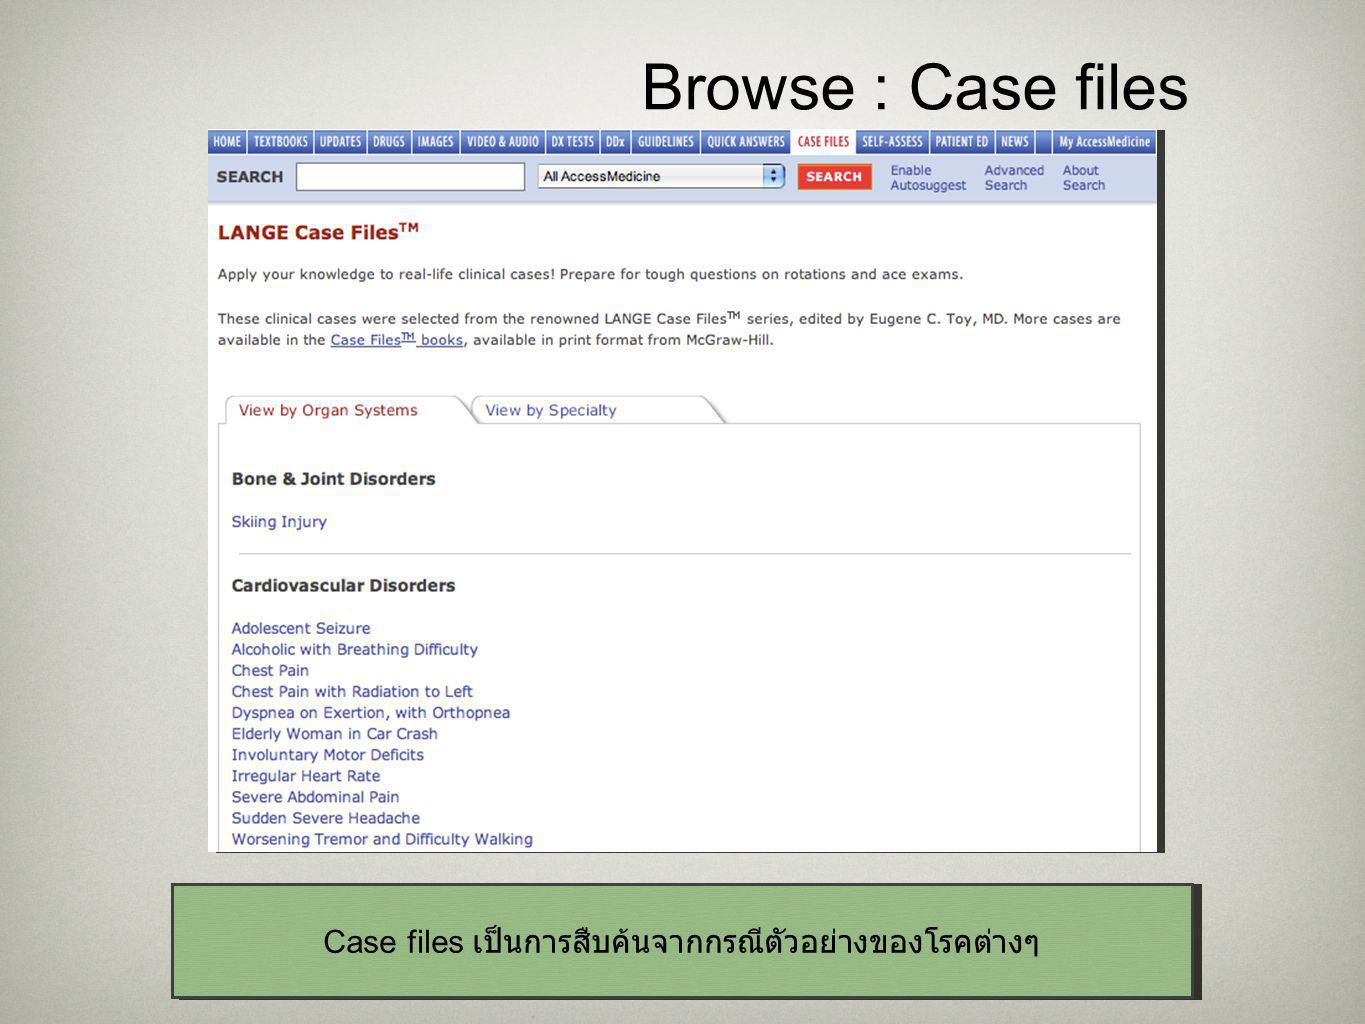 21 Browse : Case files Case files เป็นการสืบค้นจากกรณีตัวอย่างของโรคต่างๆ